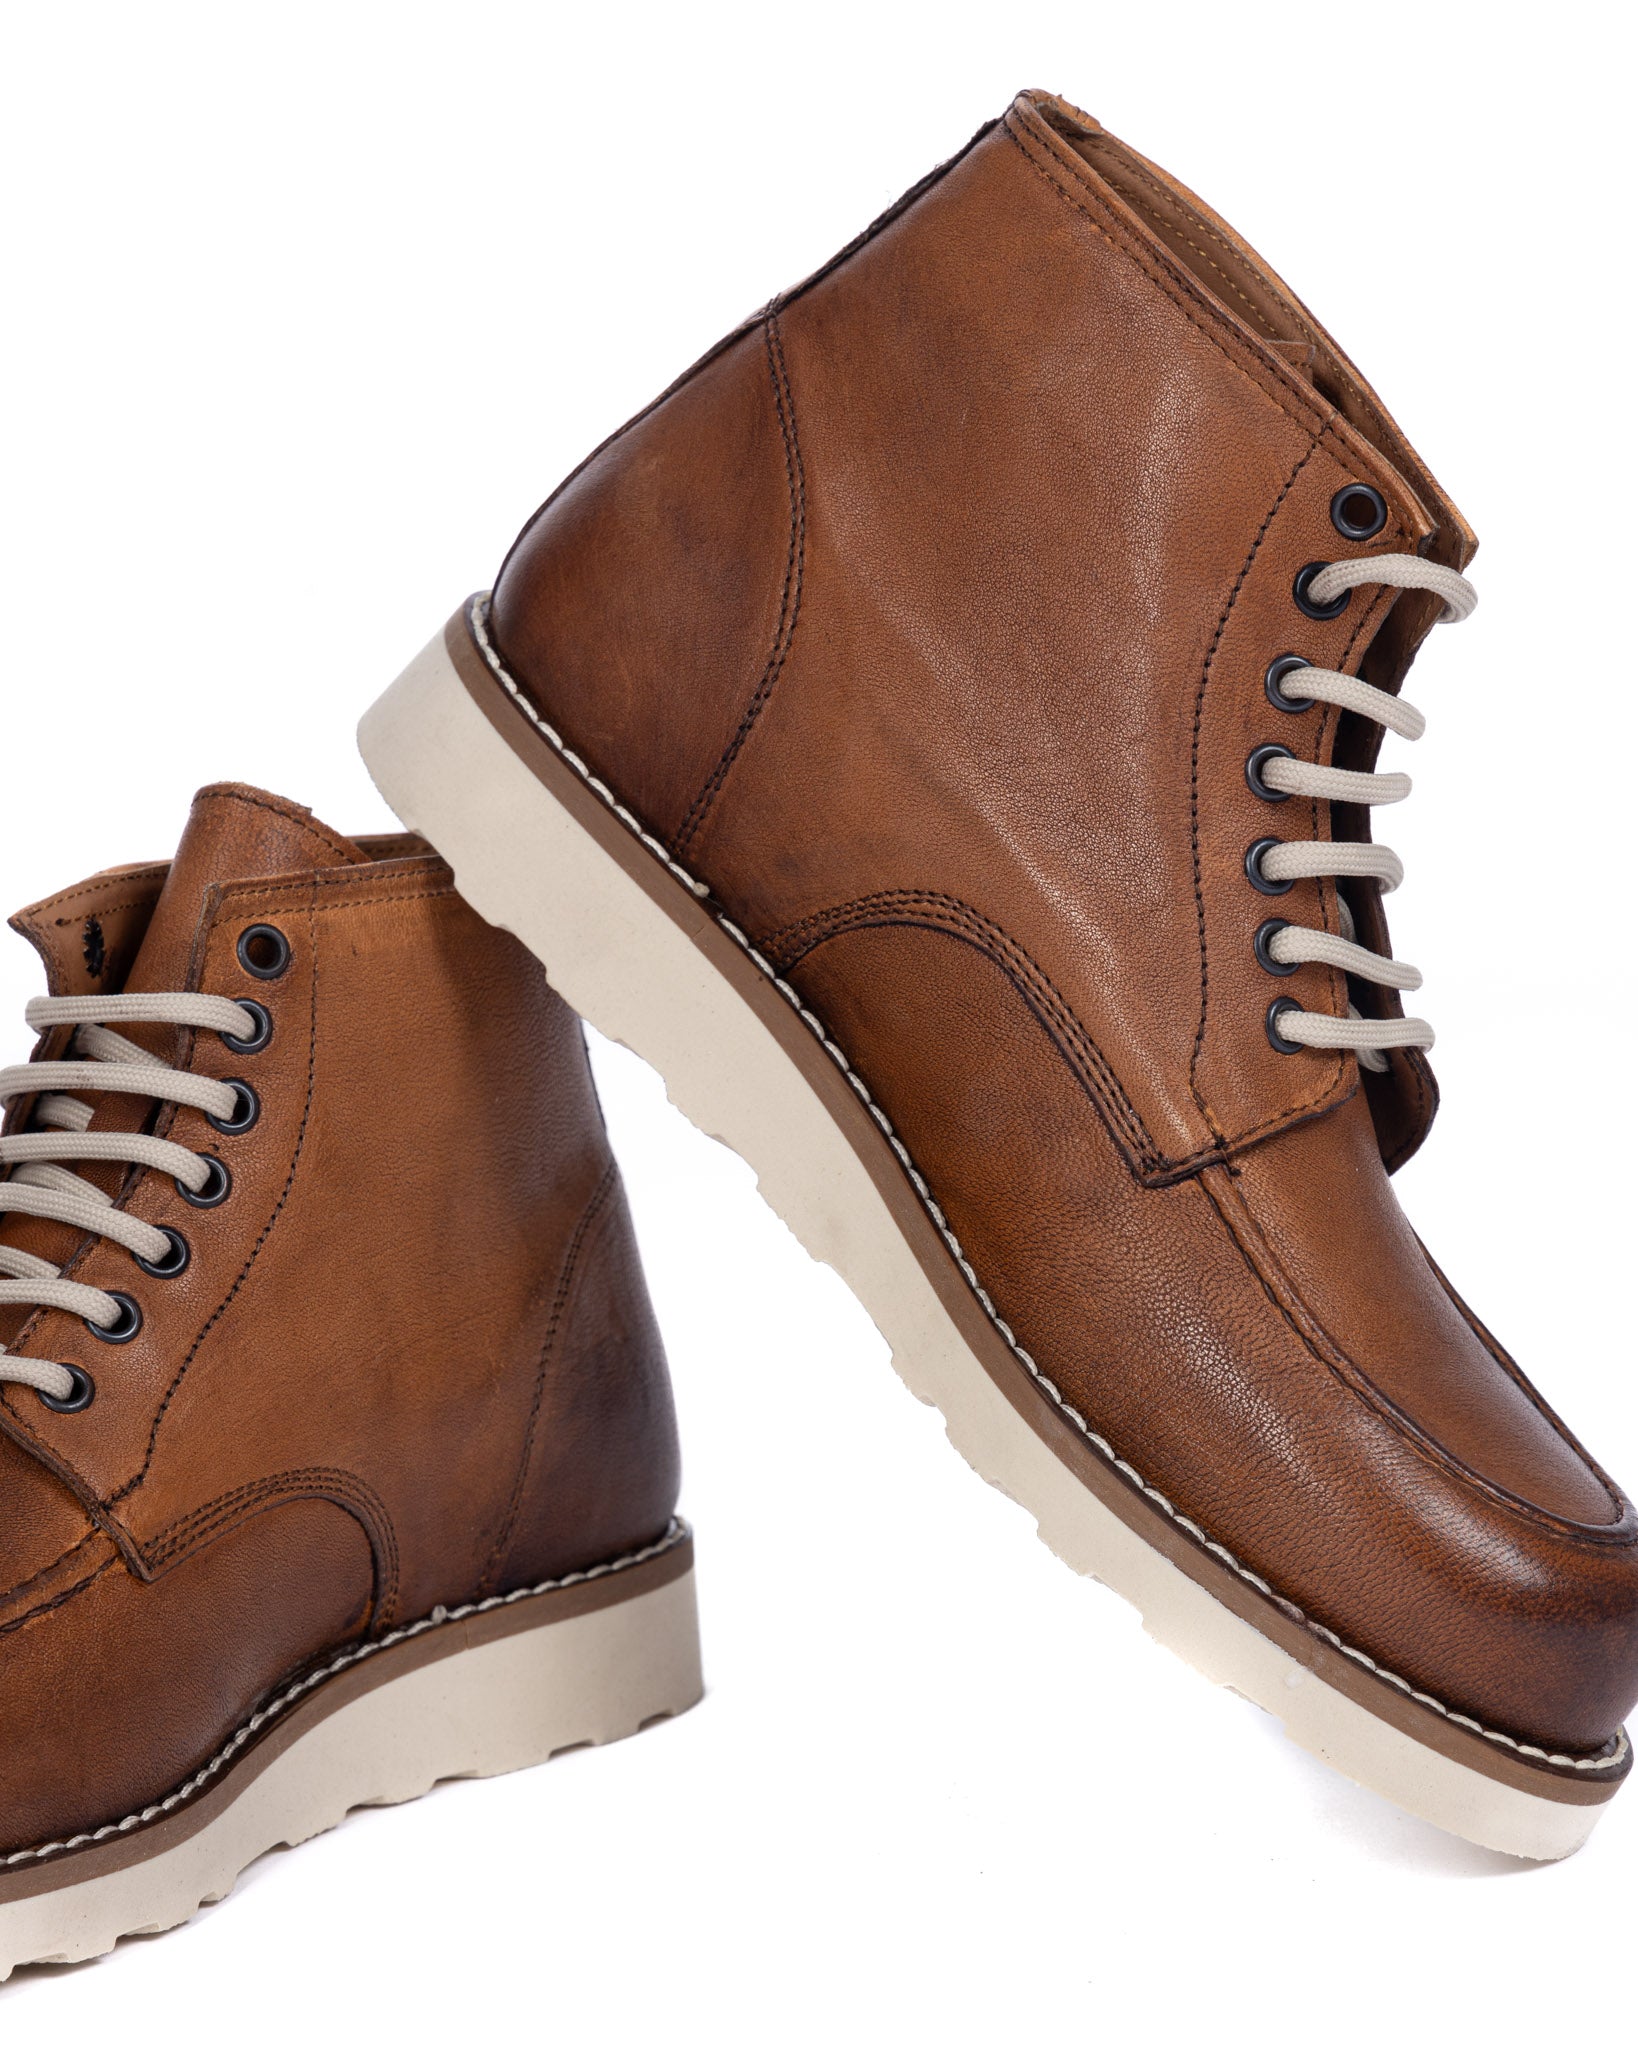 Moon - tan leather boot